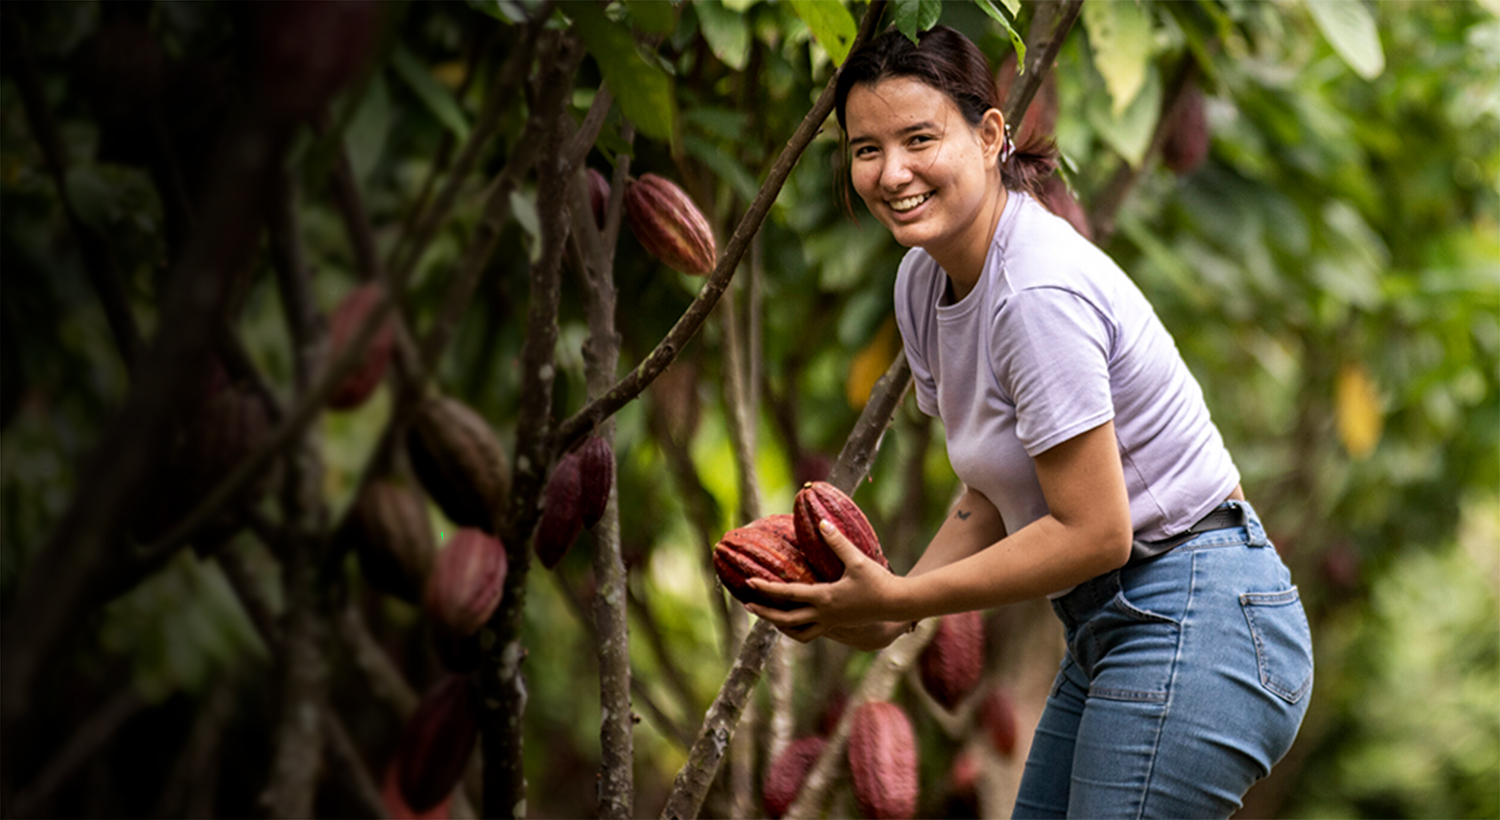 Carolina Jimenez on her family's farm in Colombia.